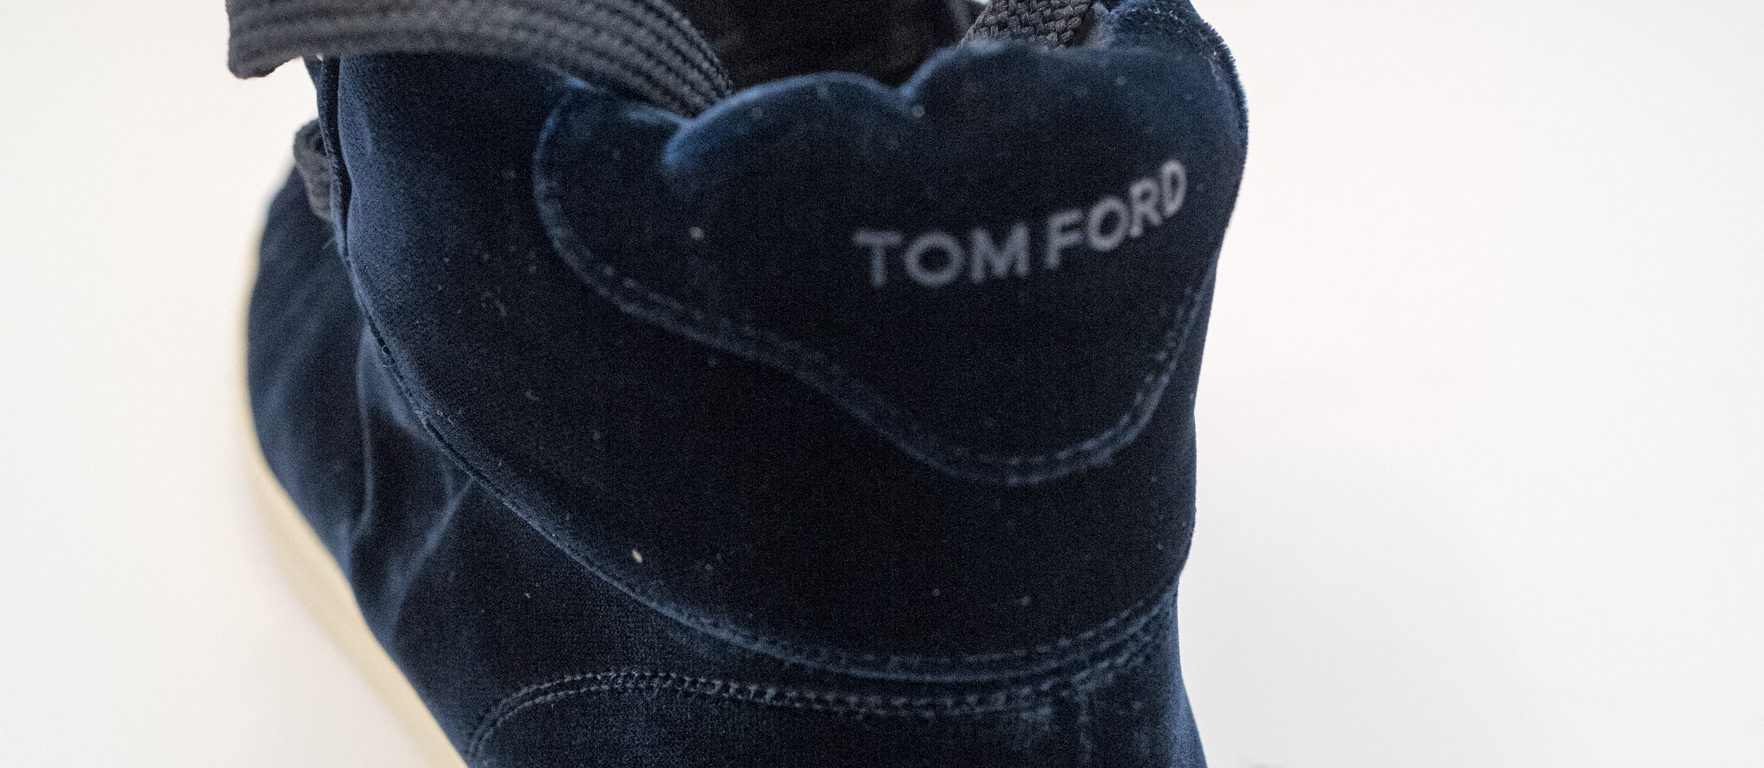 Tom Ford Velvet blue high top trainers